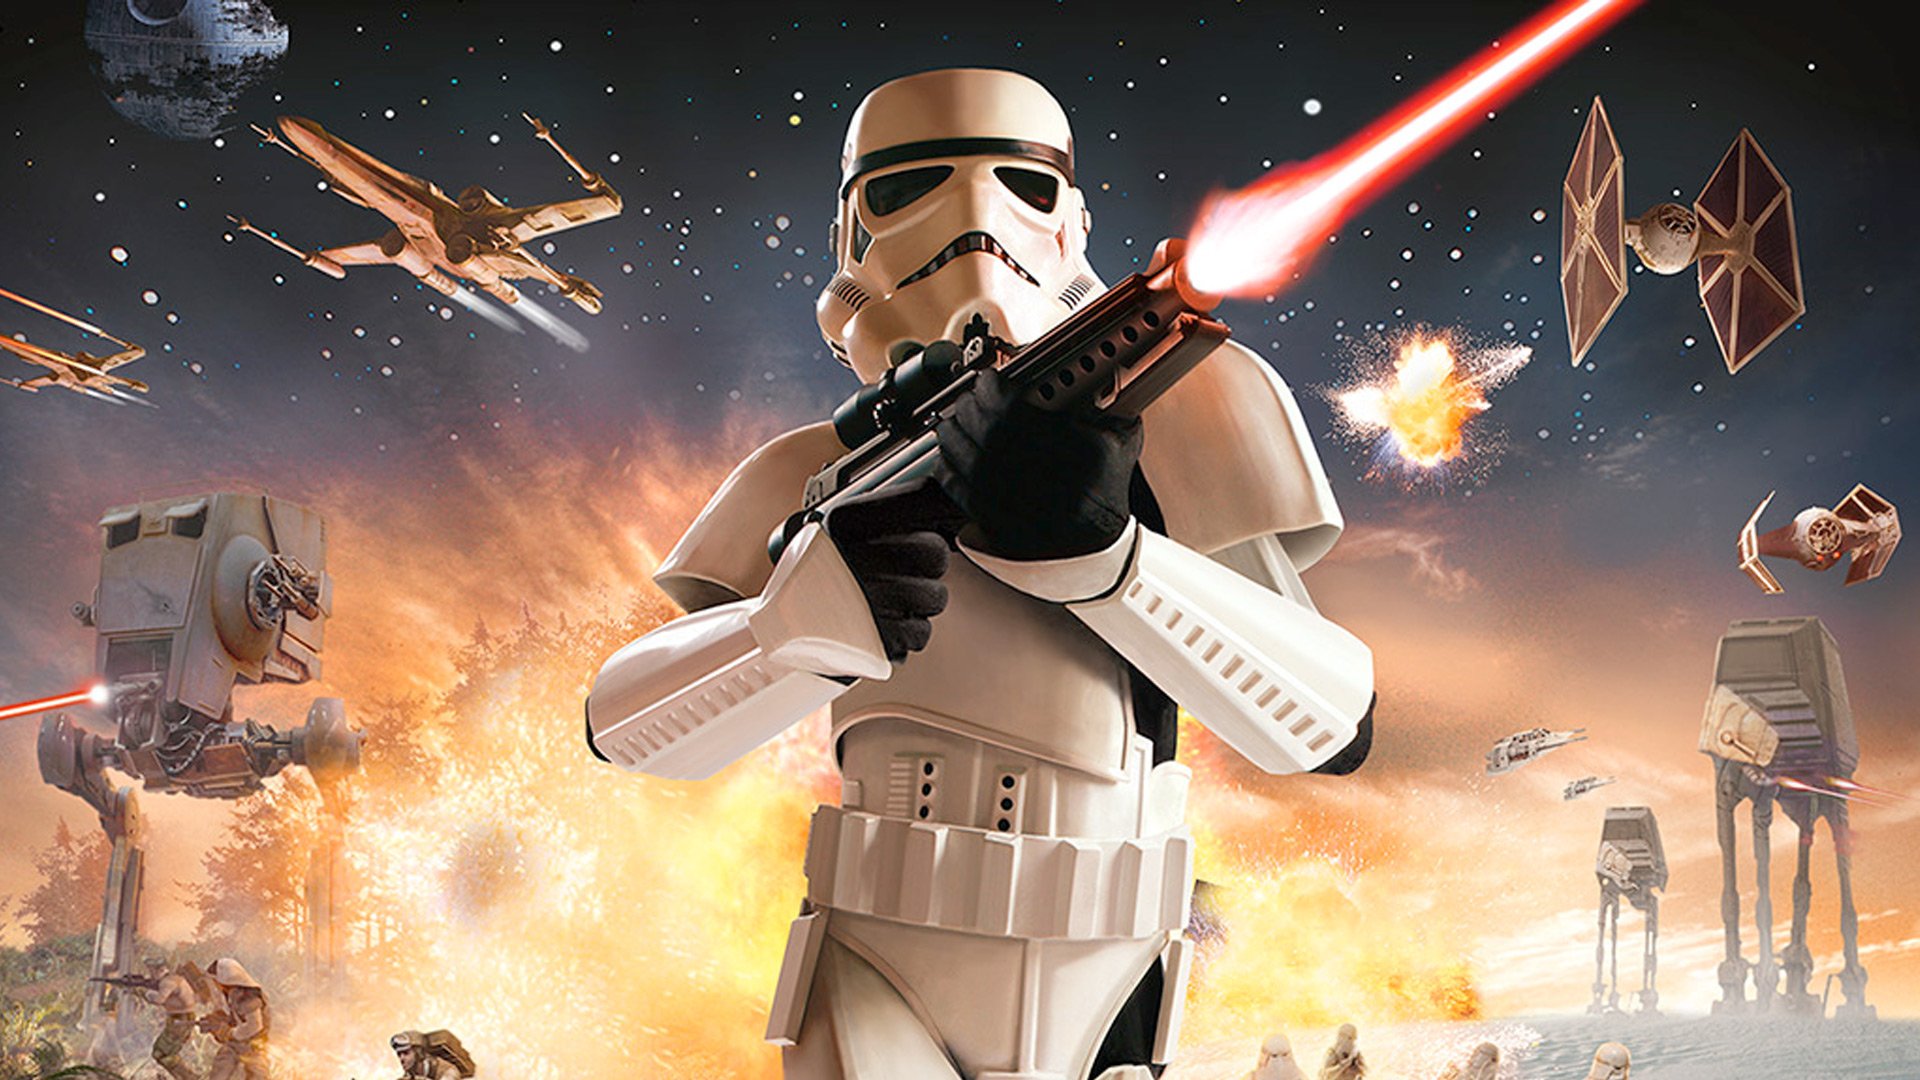 star wars battlefront pc free full download